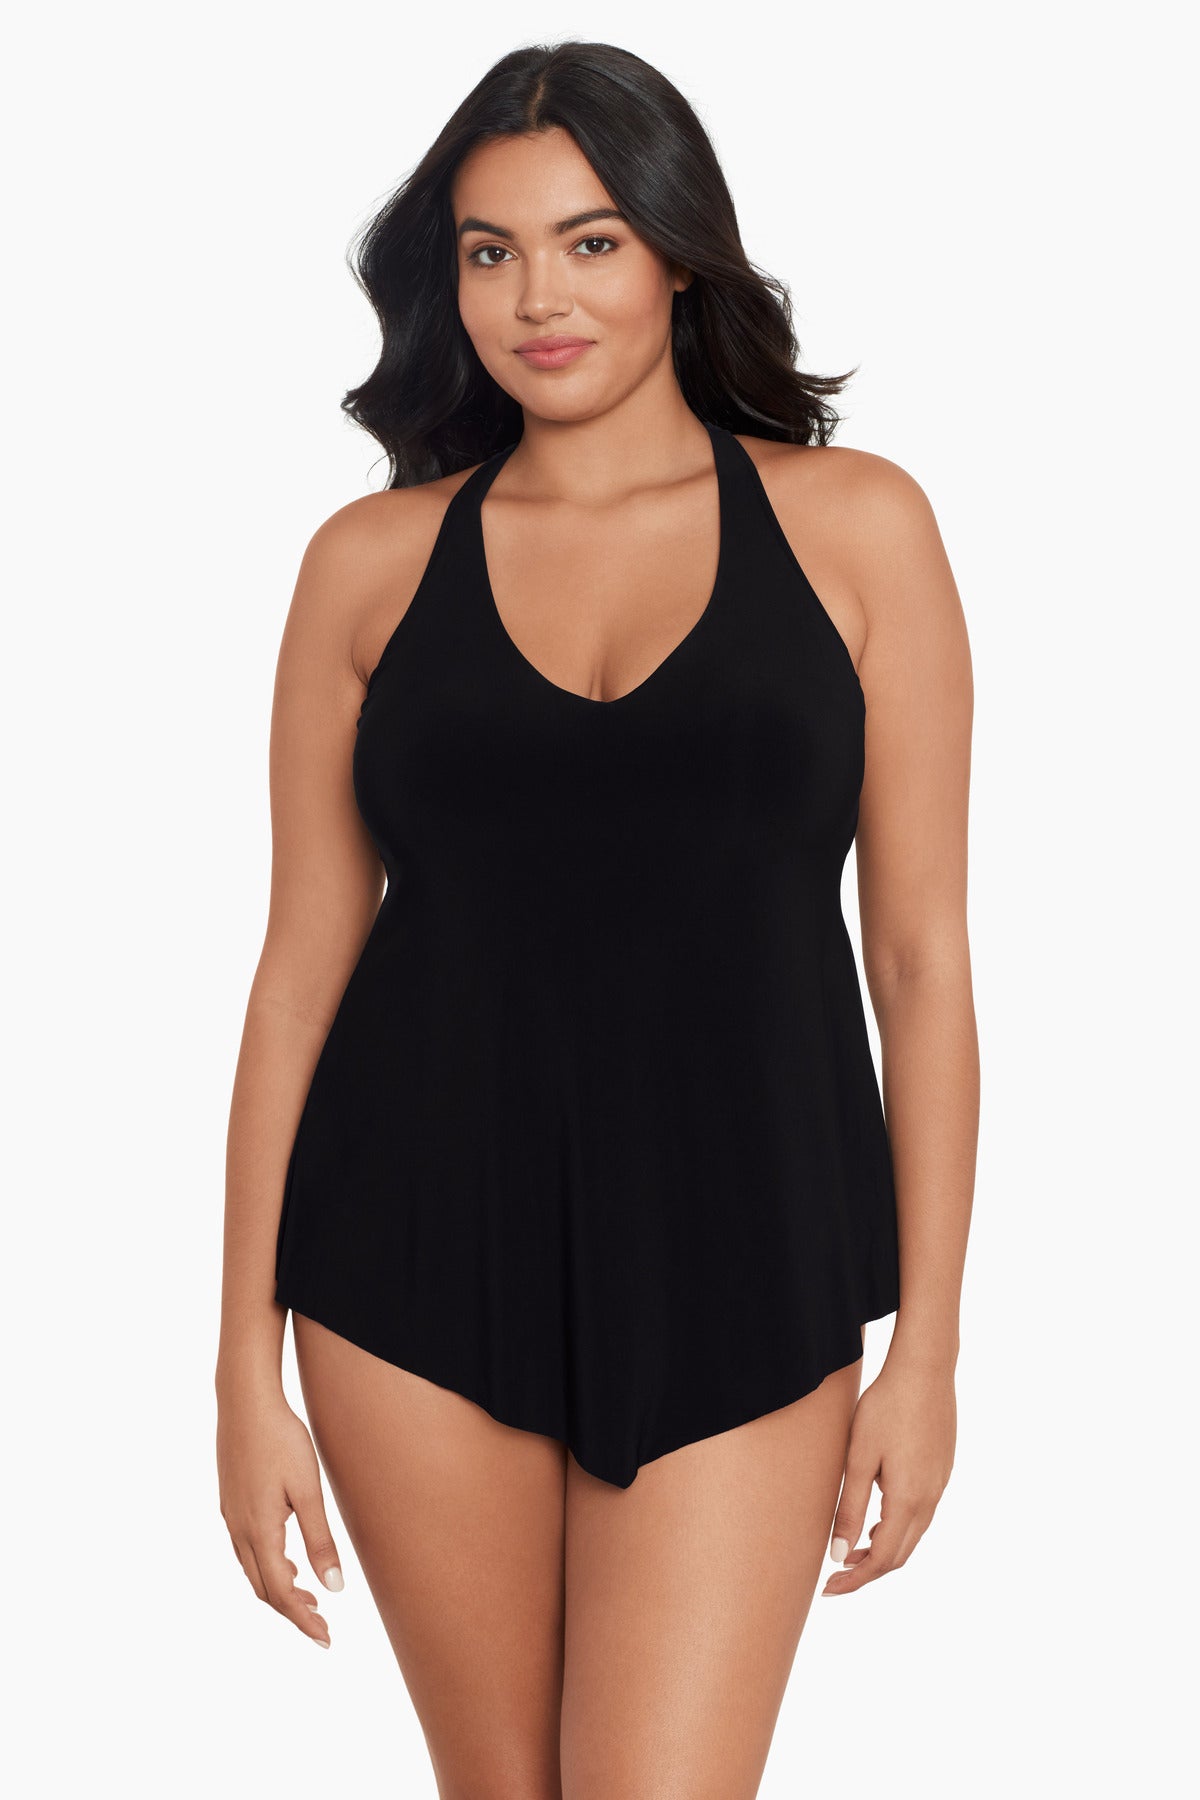 Plus Size Black Plussized Plus Size Underwire Swimsuits For Women